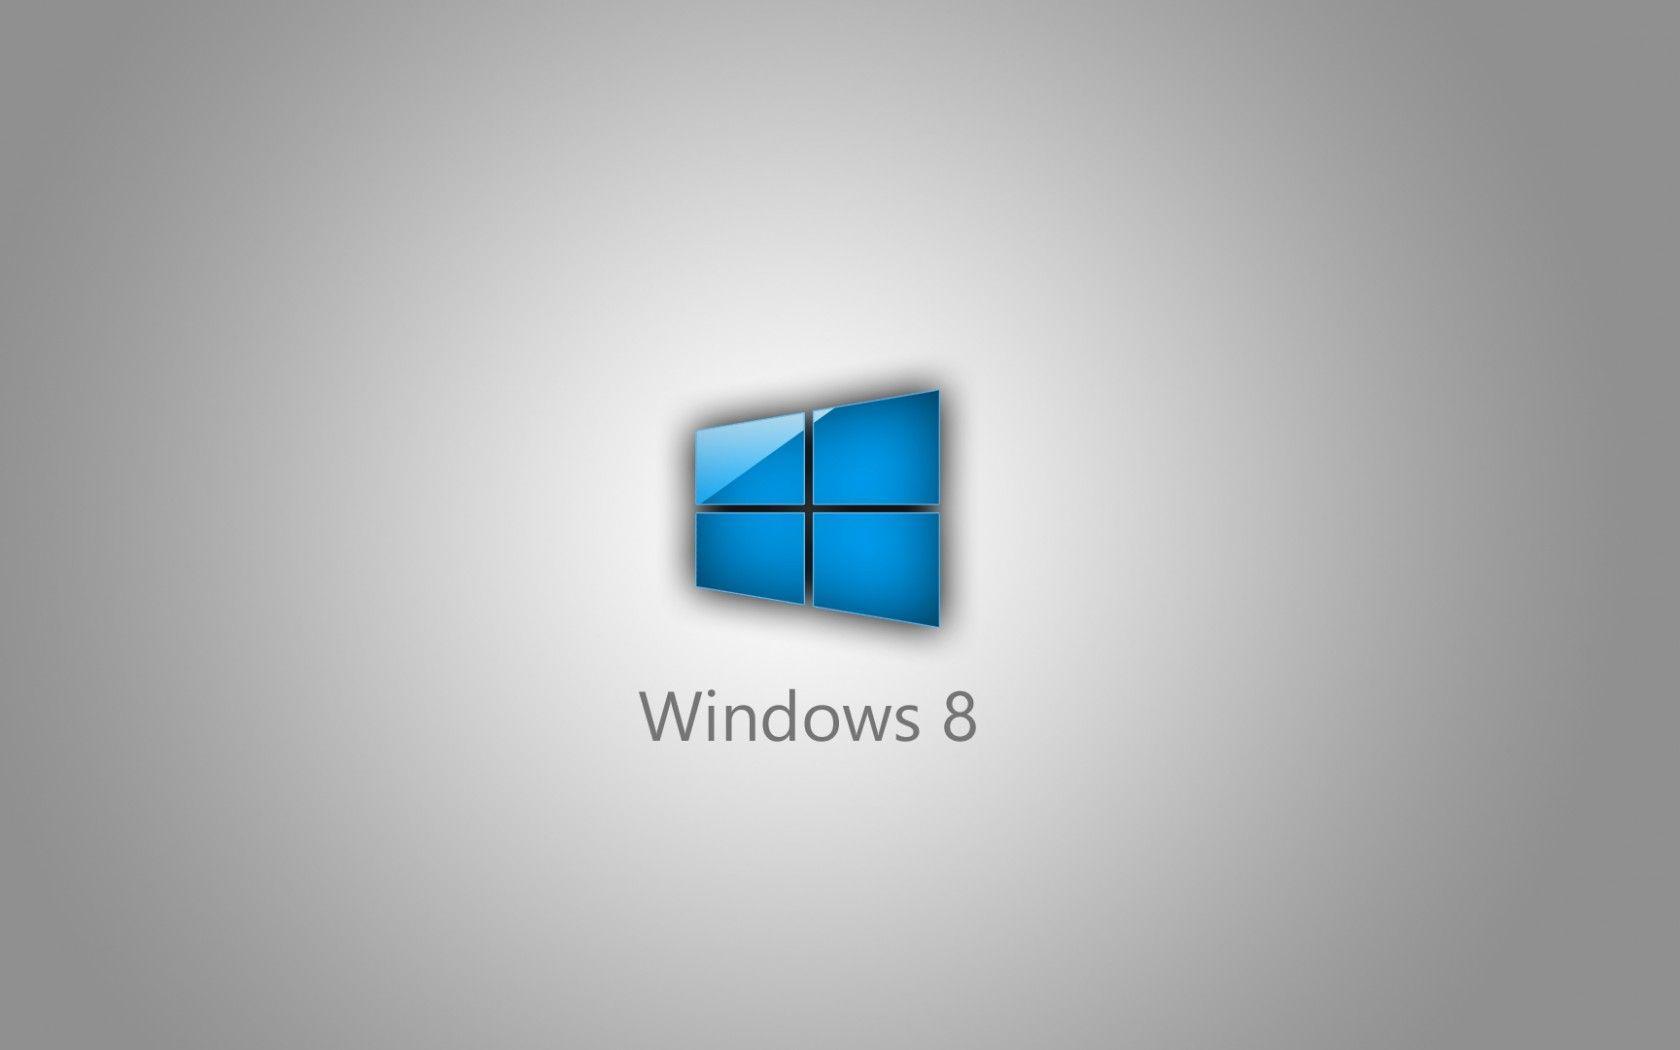 microsoft windows 7 desktop wallpaper